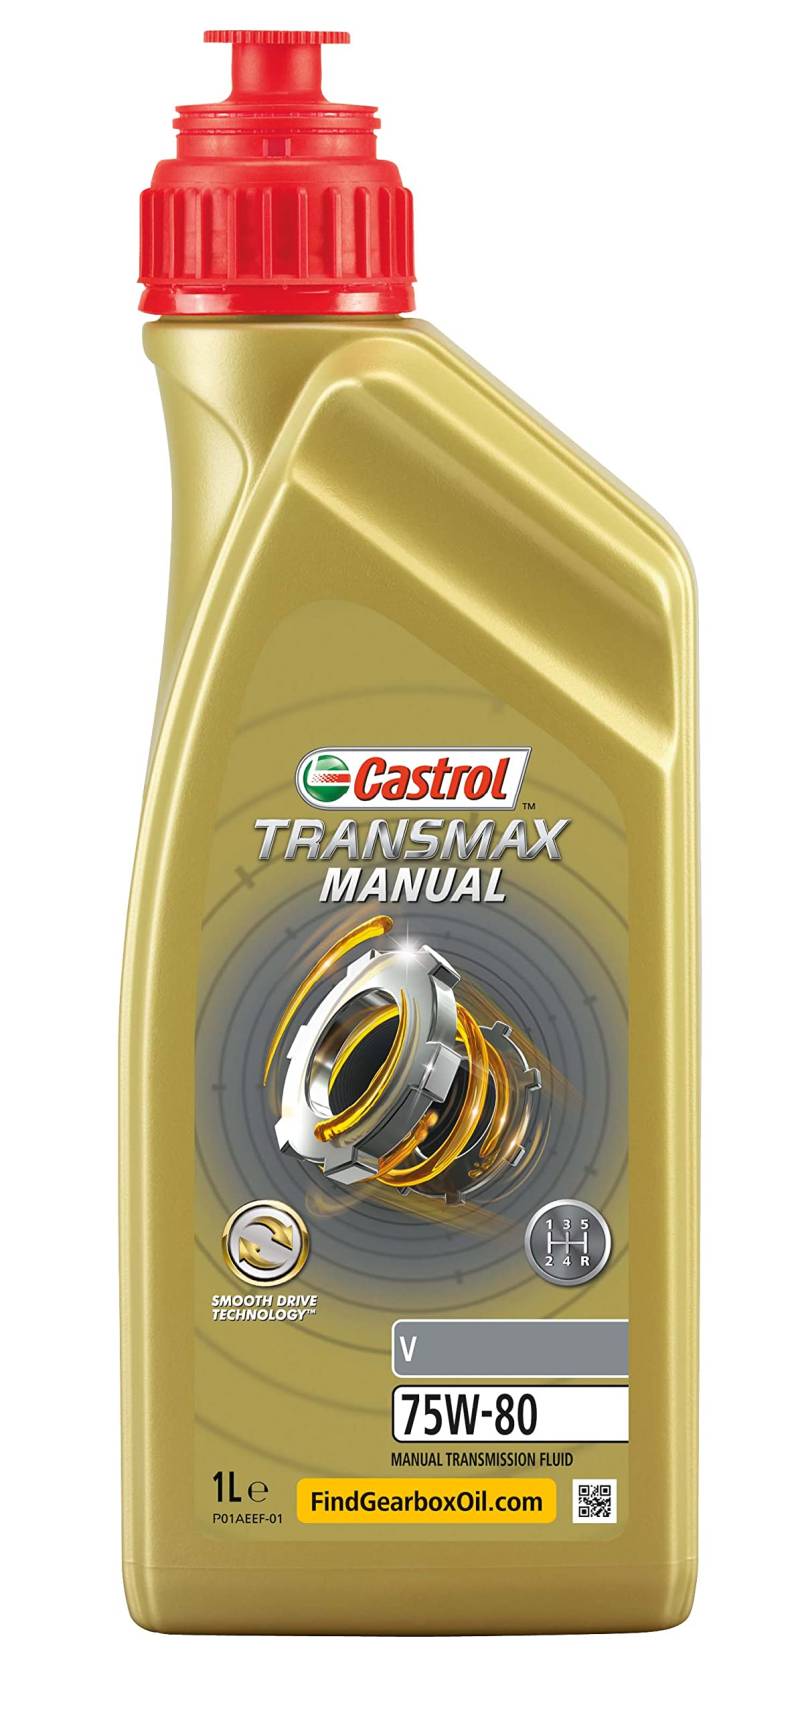 Castrol TRANSMAX Manual V 75W-80, 1 Liter von Castrol